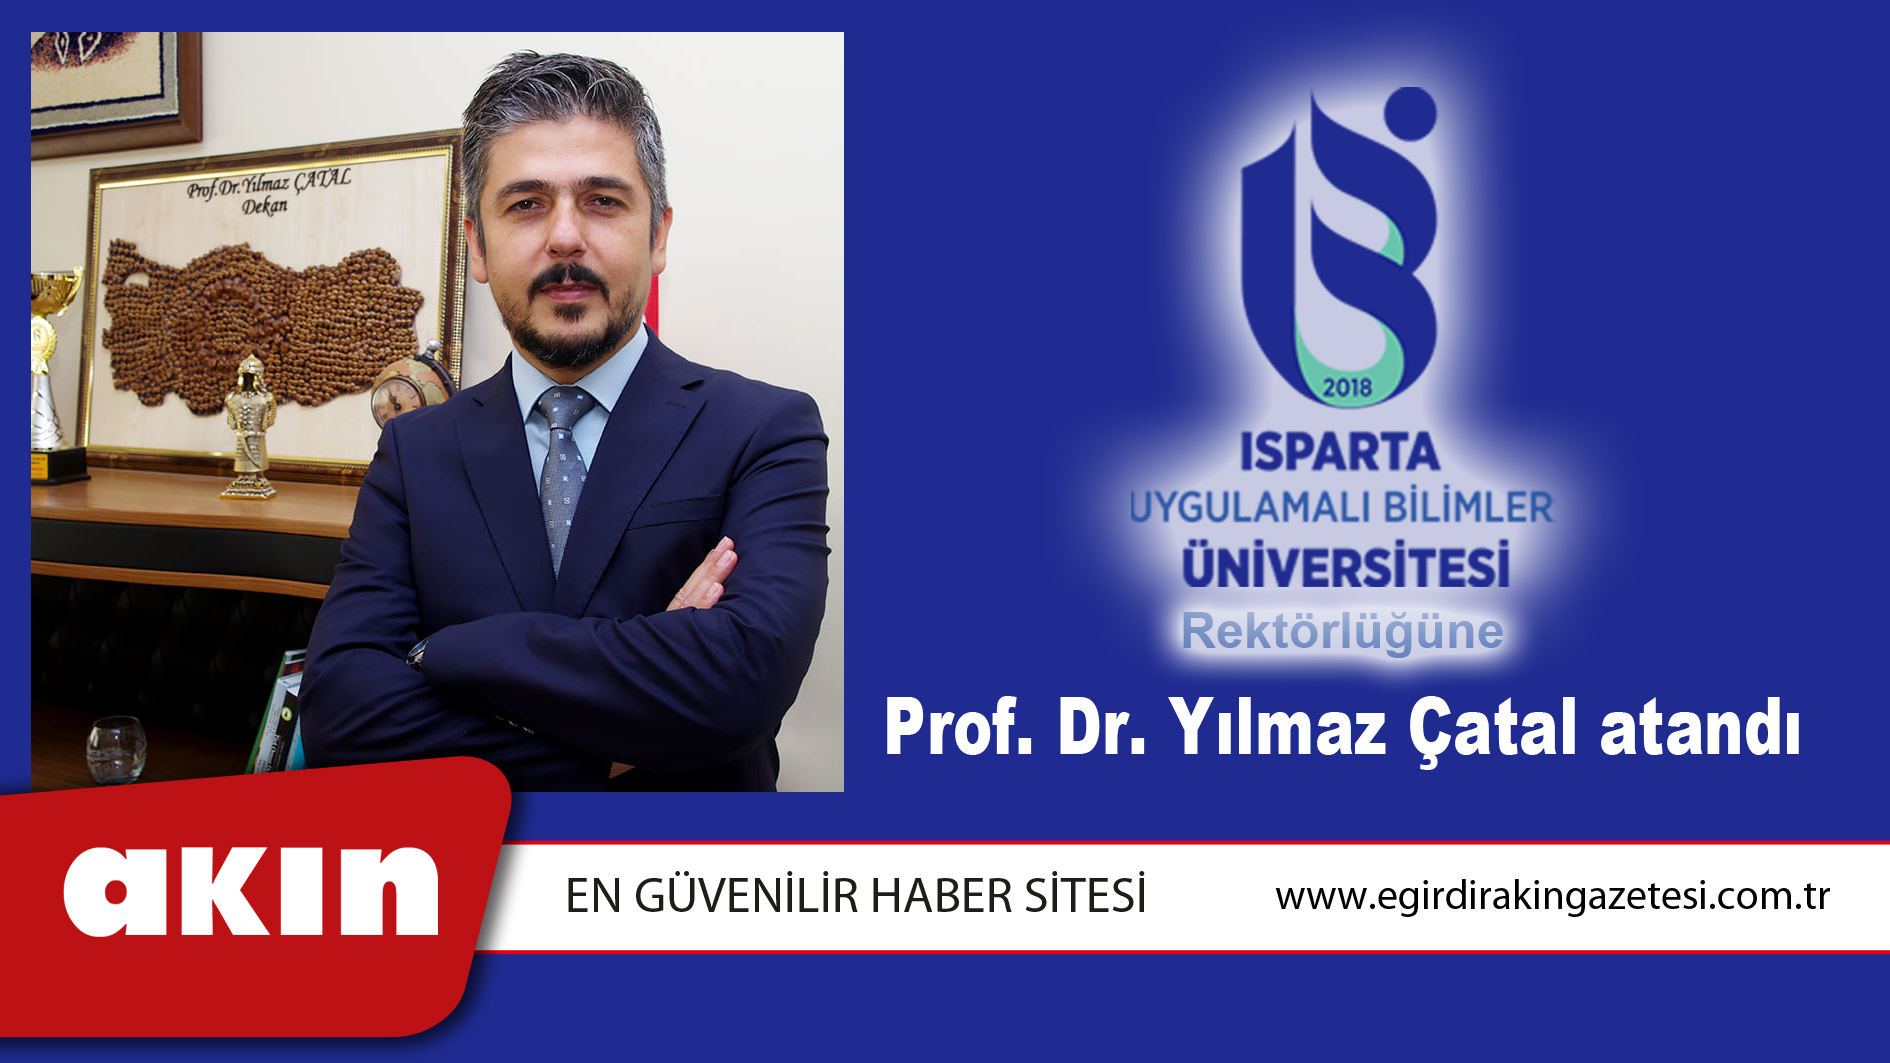 ISUBÜ Rektörlüğüne Prof. Dr. Yılmaz Çatal atandı